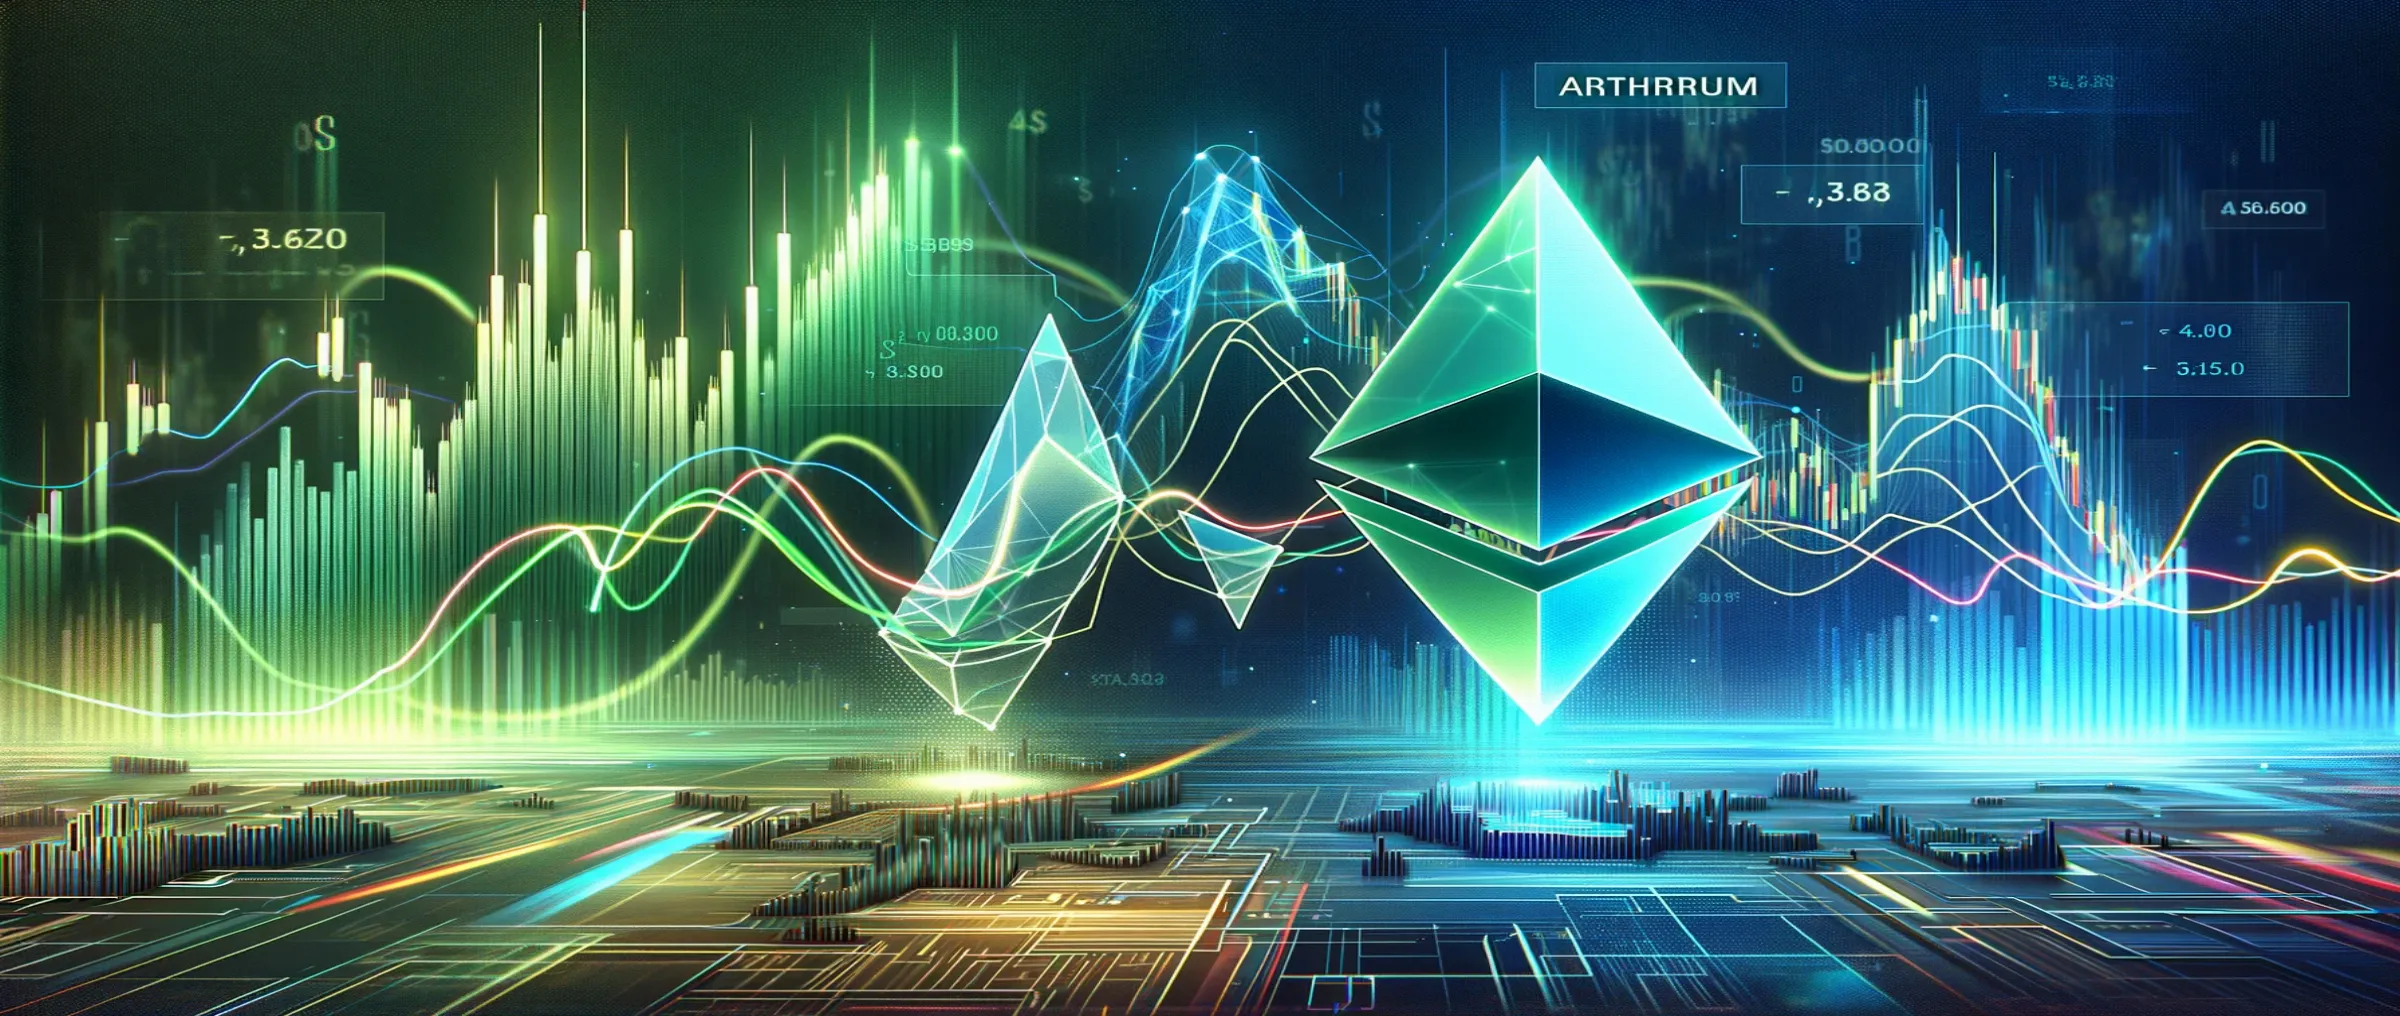 Arbitrum surpassed Ethereum in terms of trading volume on decentralized exchanges (DEX)